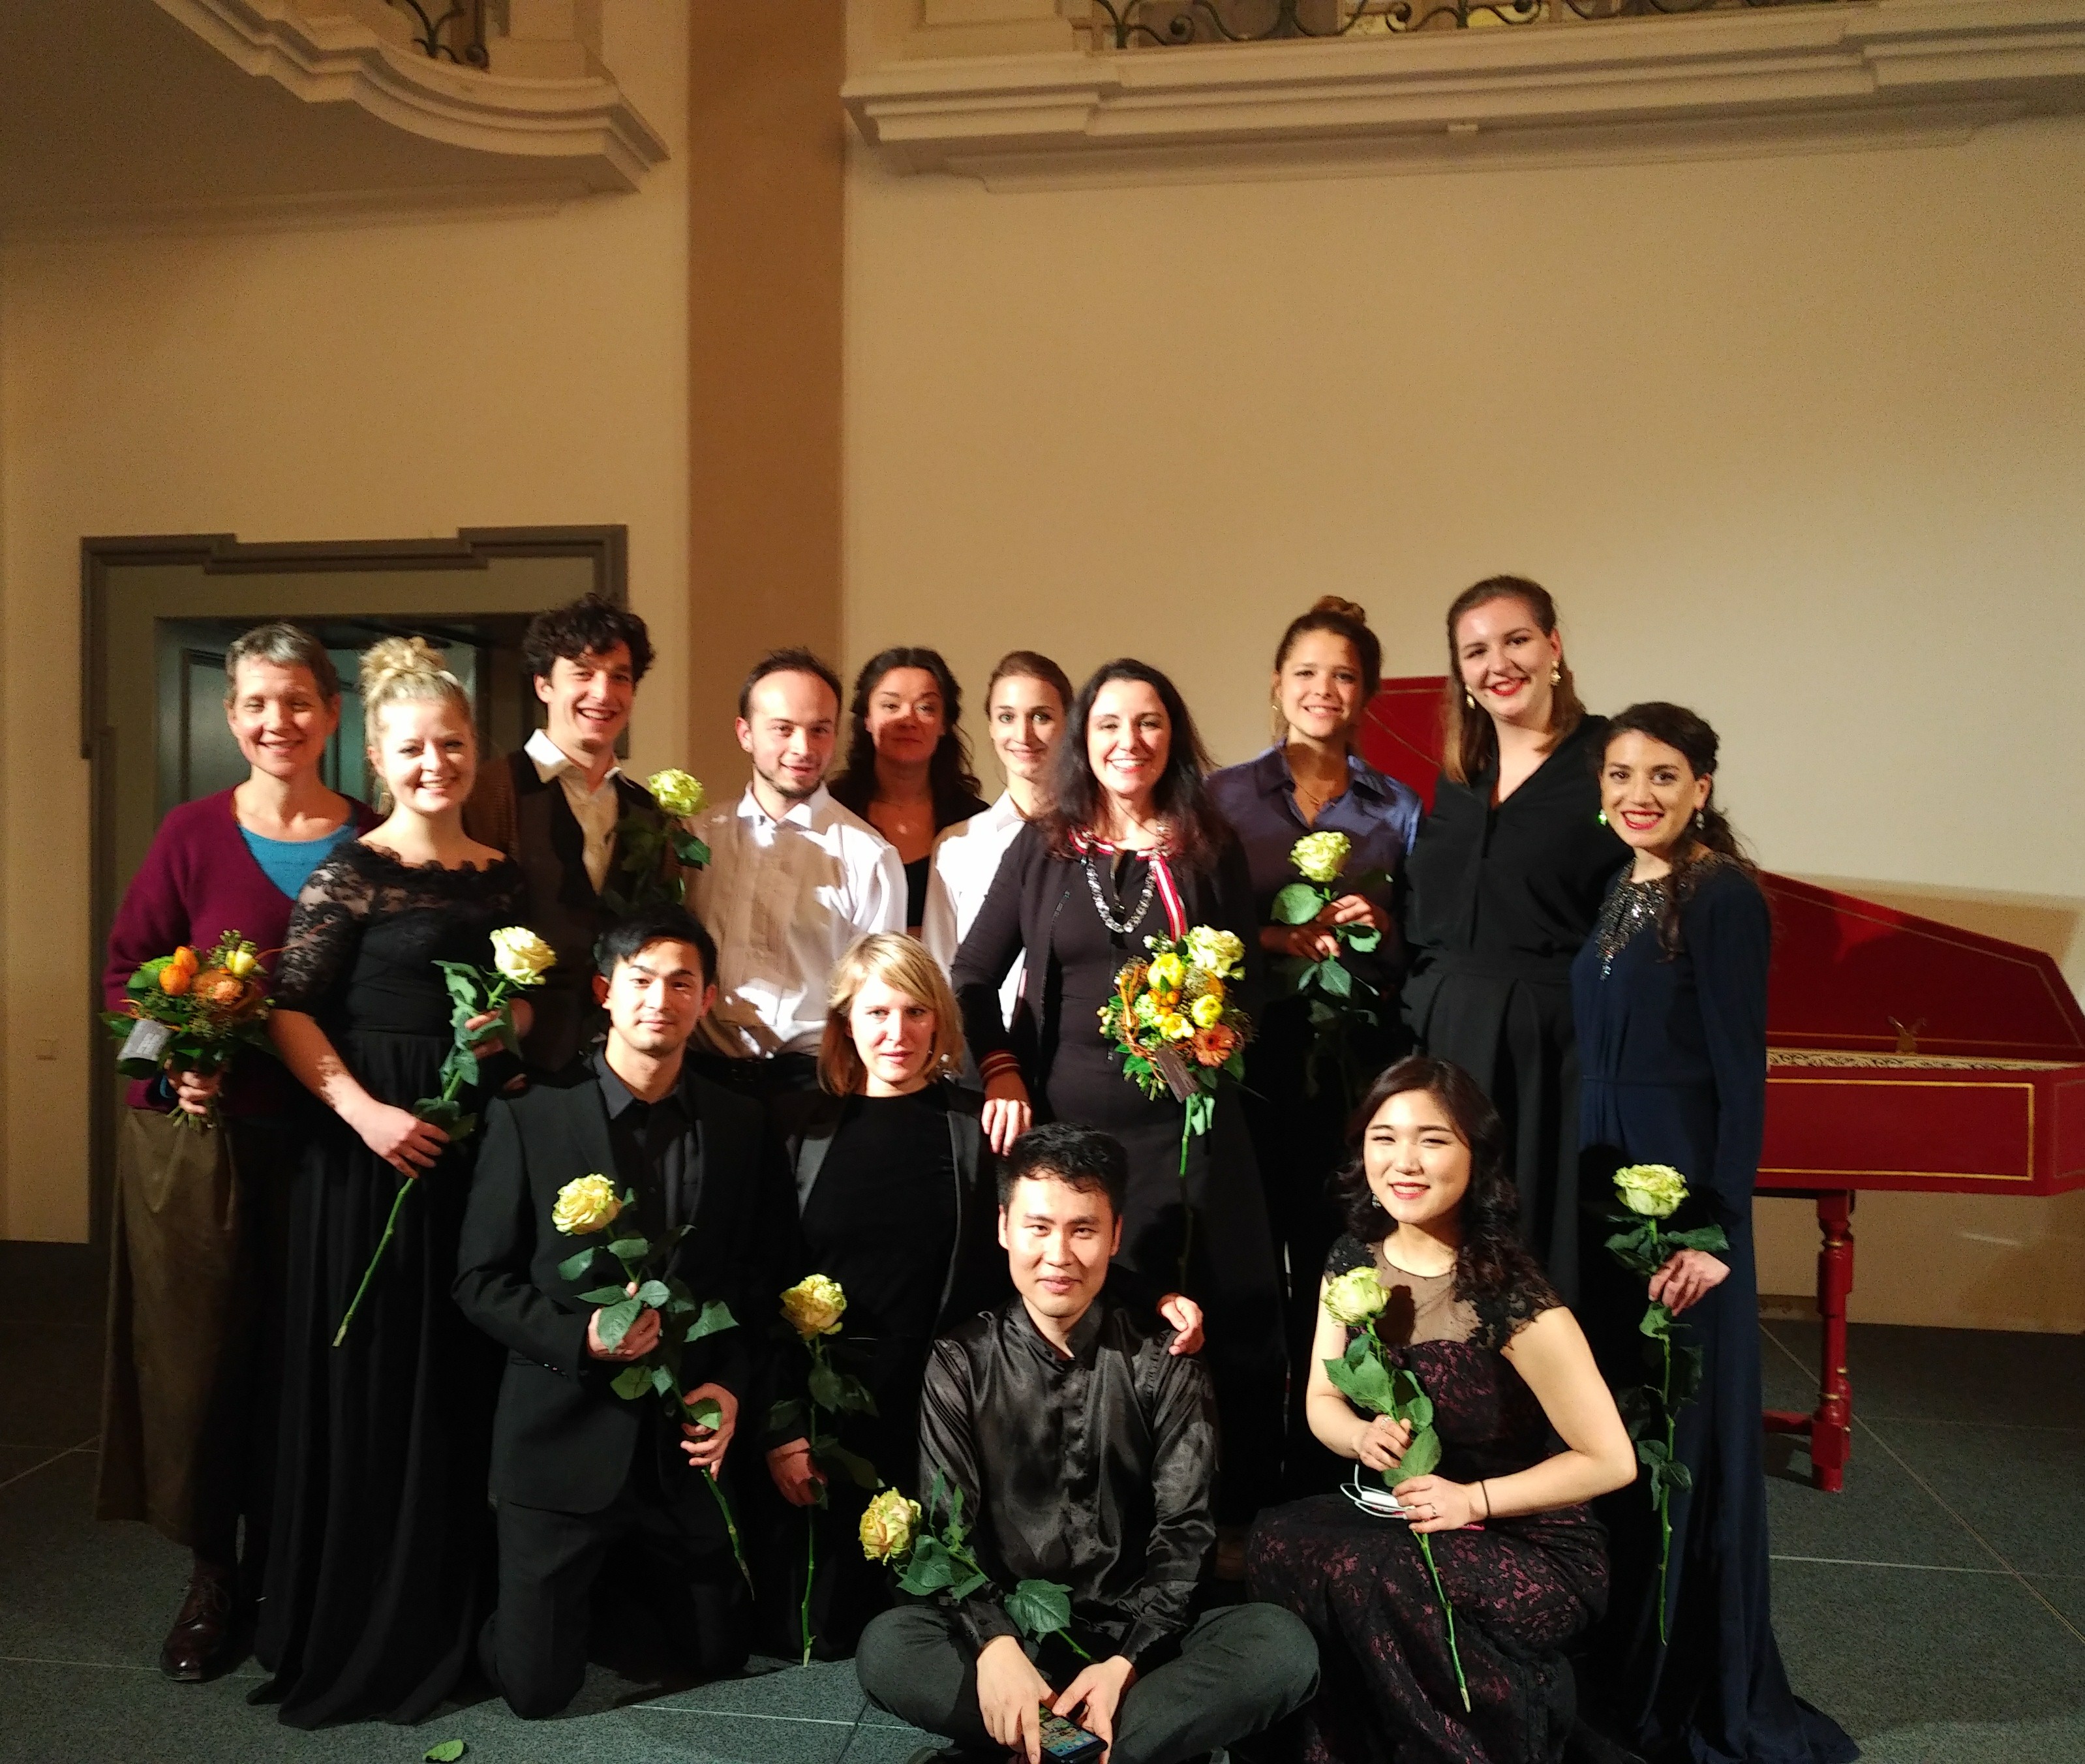 Anna Bonitatibus at 33 Internationale Händel Akademie